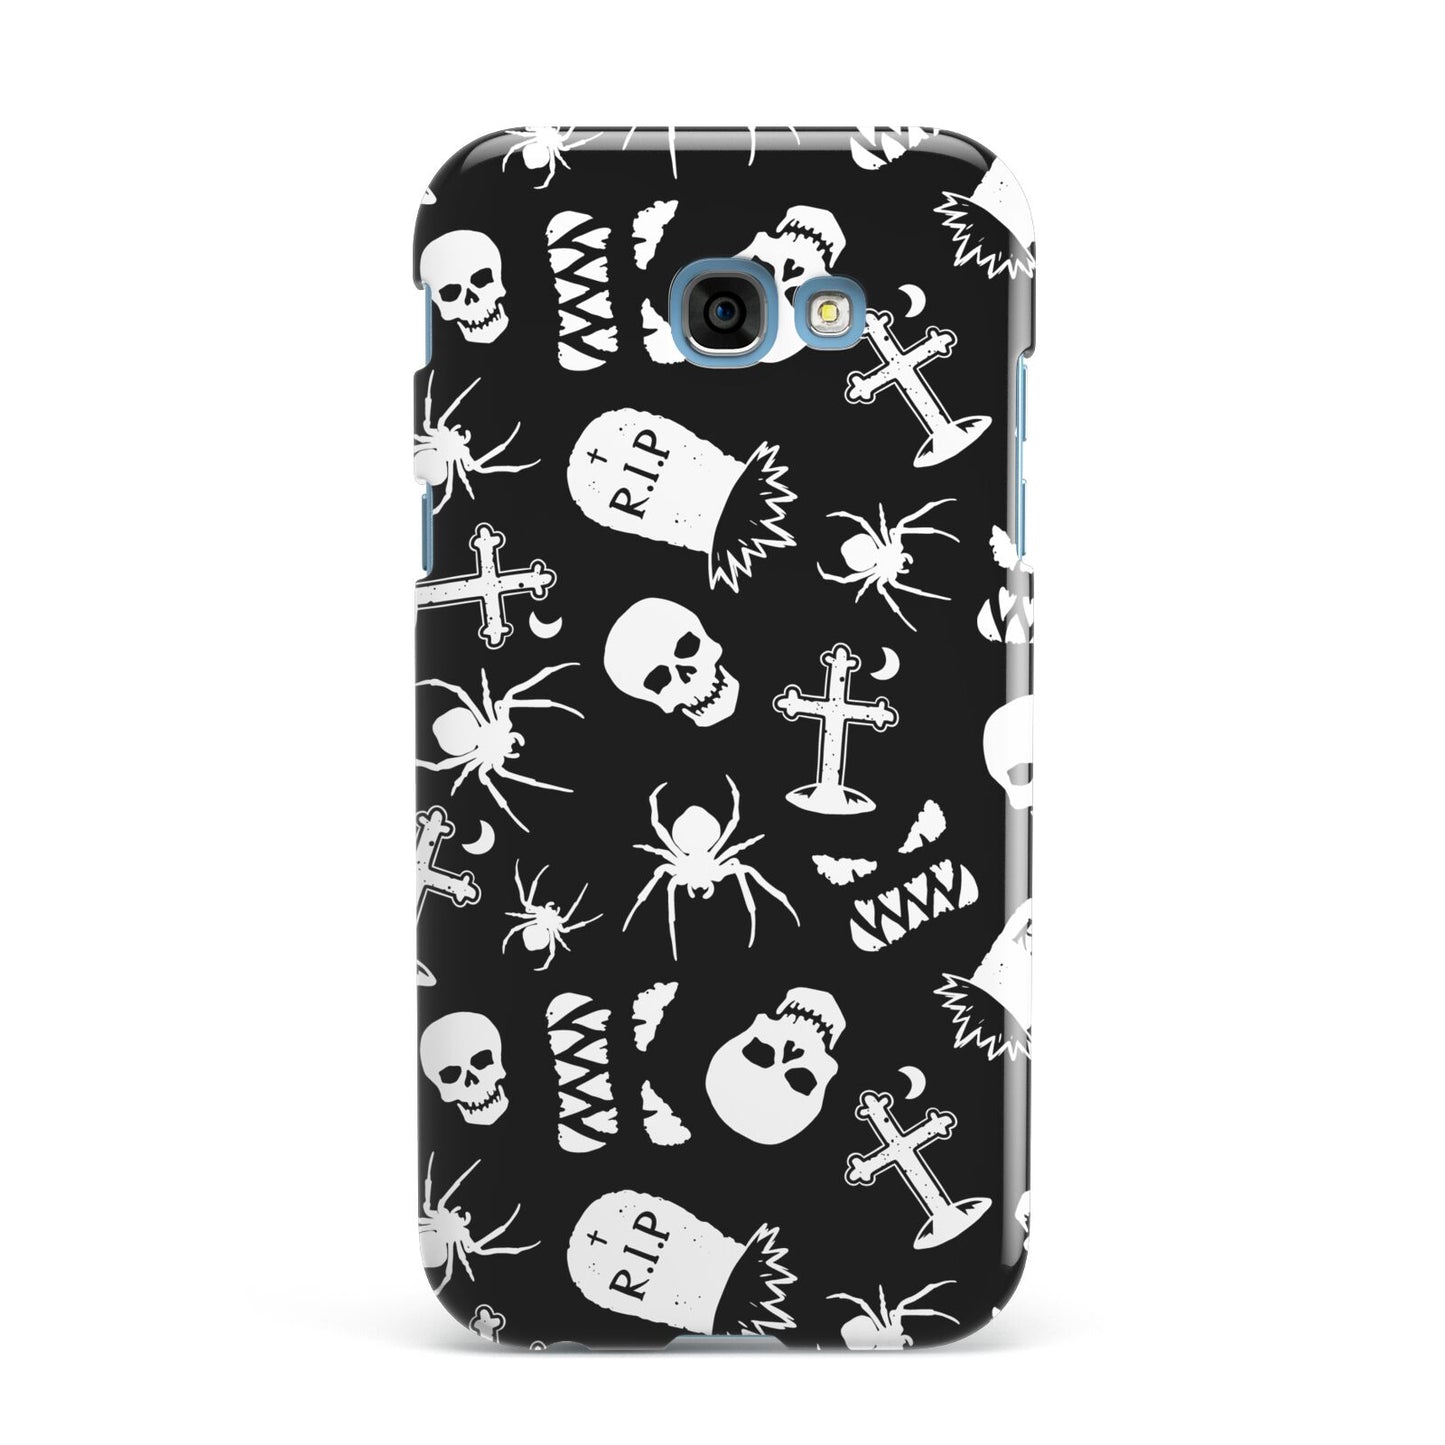 Spooky Illustrations Samsung Galaxy A7 2017 Case